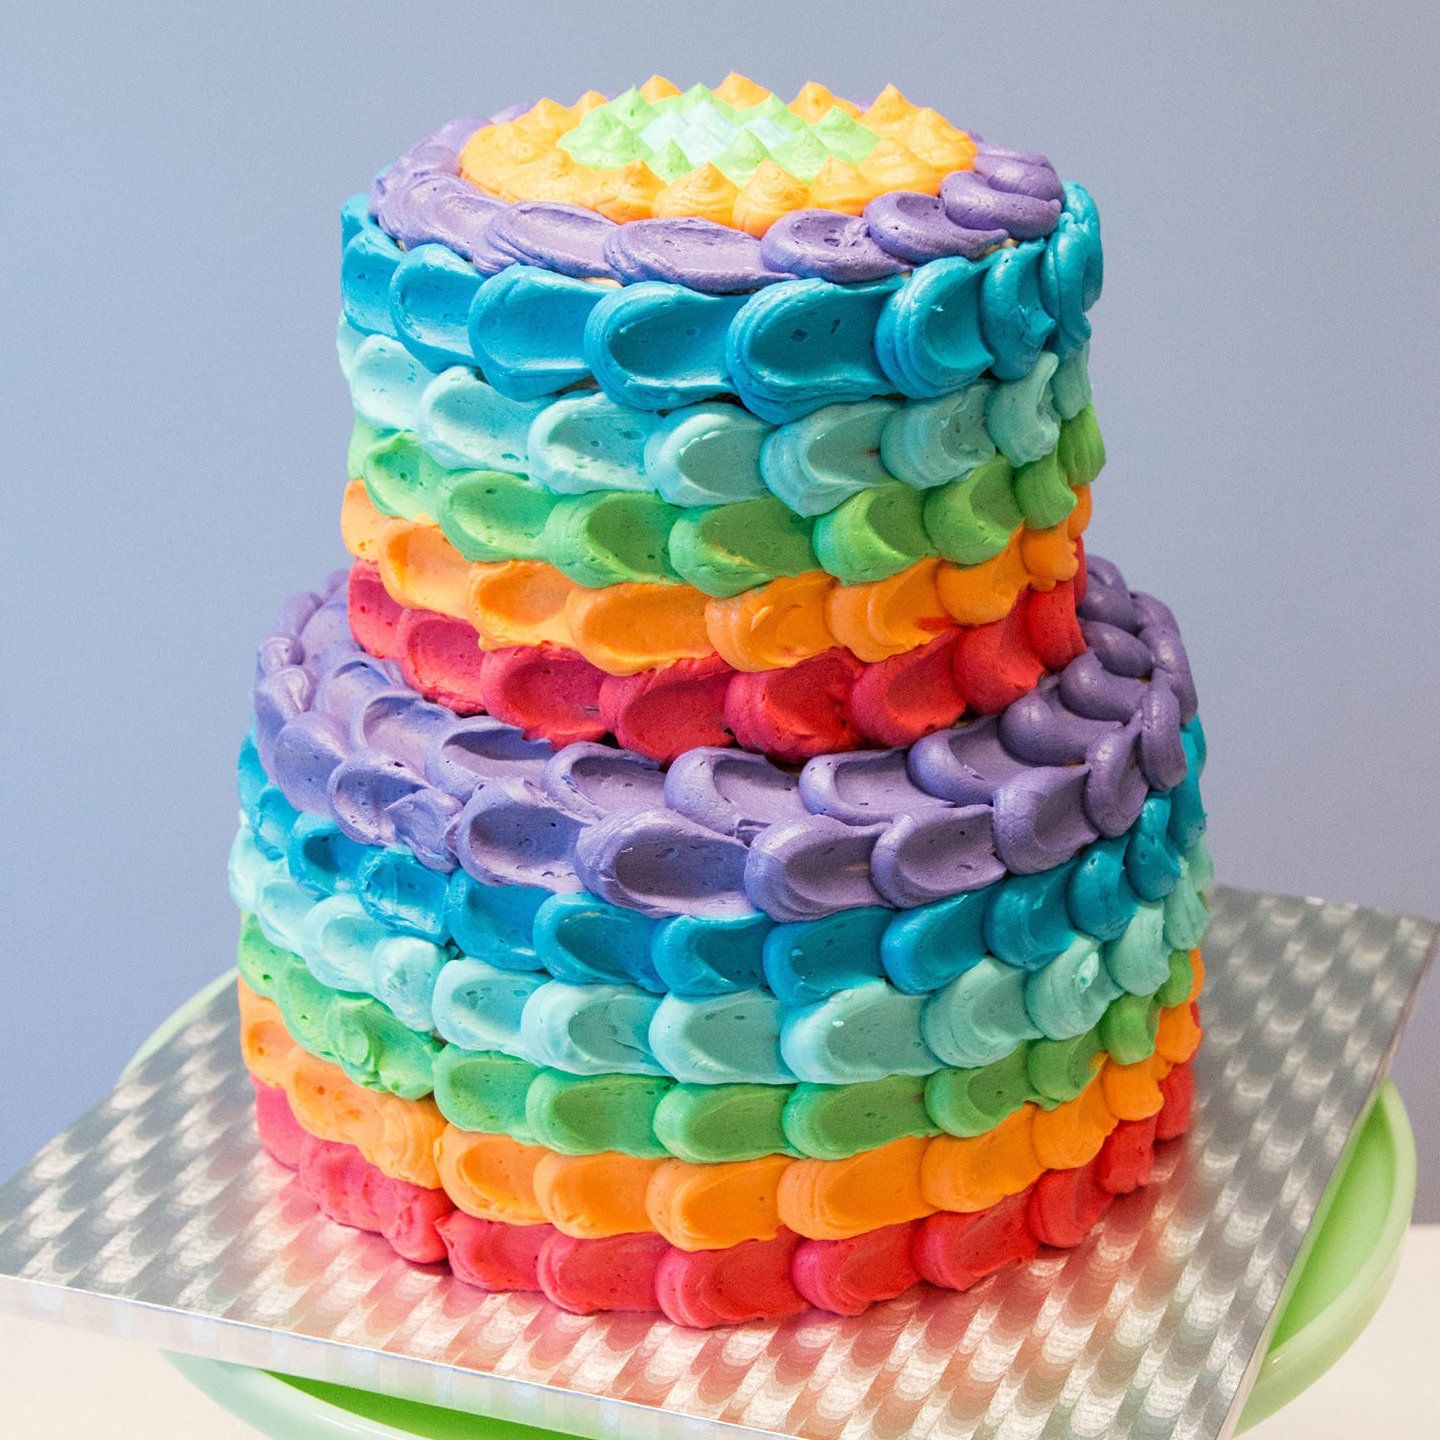 Buy Online Rainbow Cakes in Kolkata - Cakes and Bakes